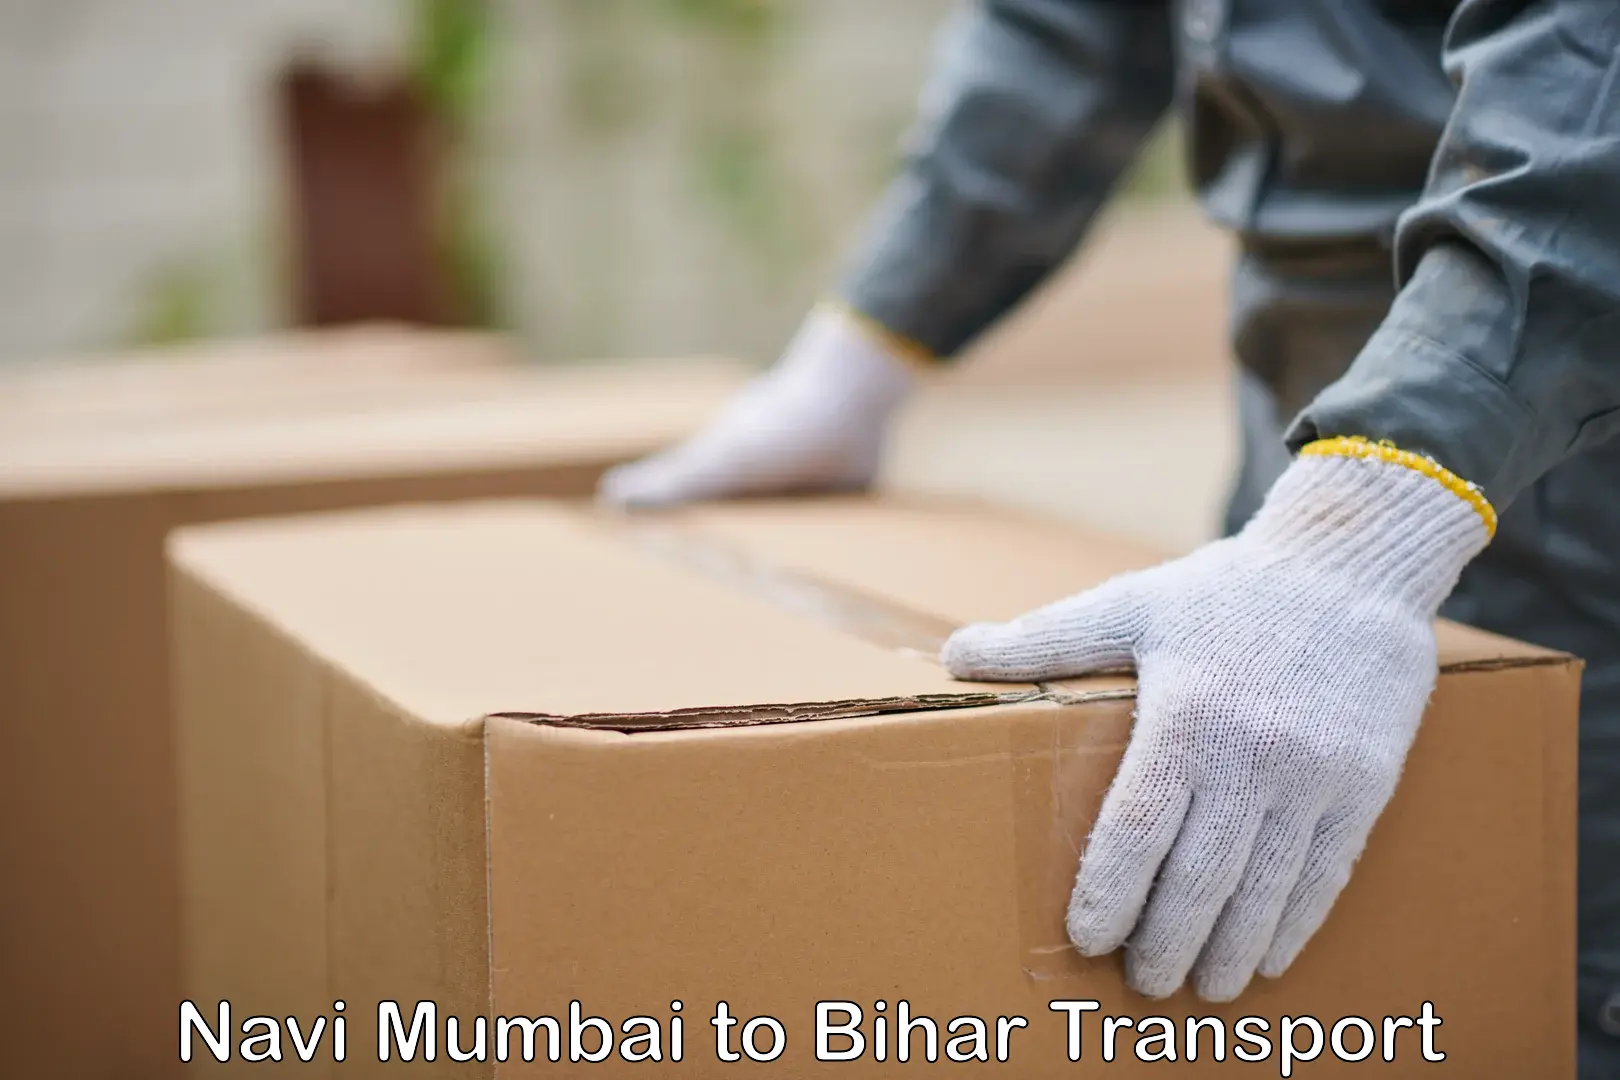 Truck transport companies in India Navi Mumbai to Sandesh